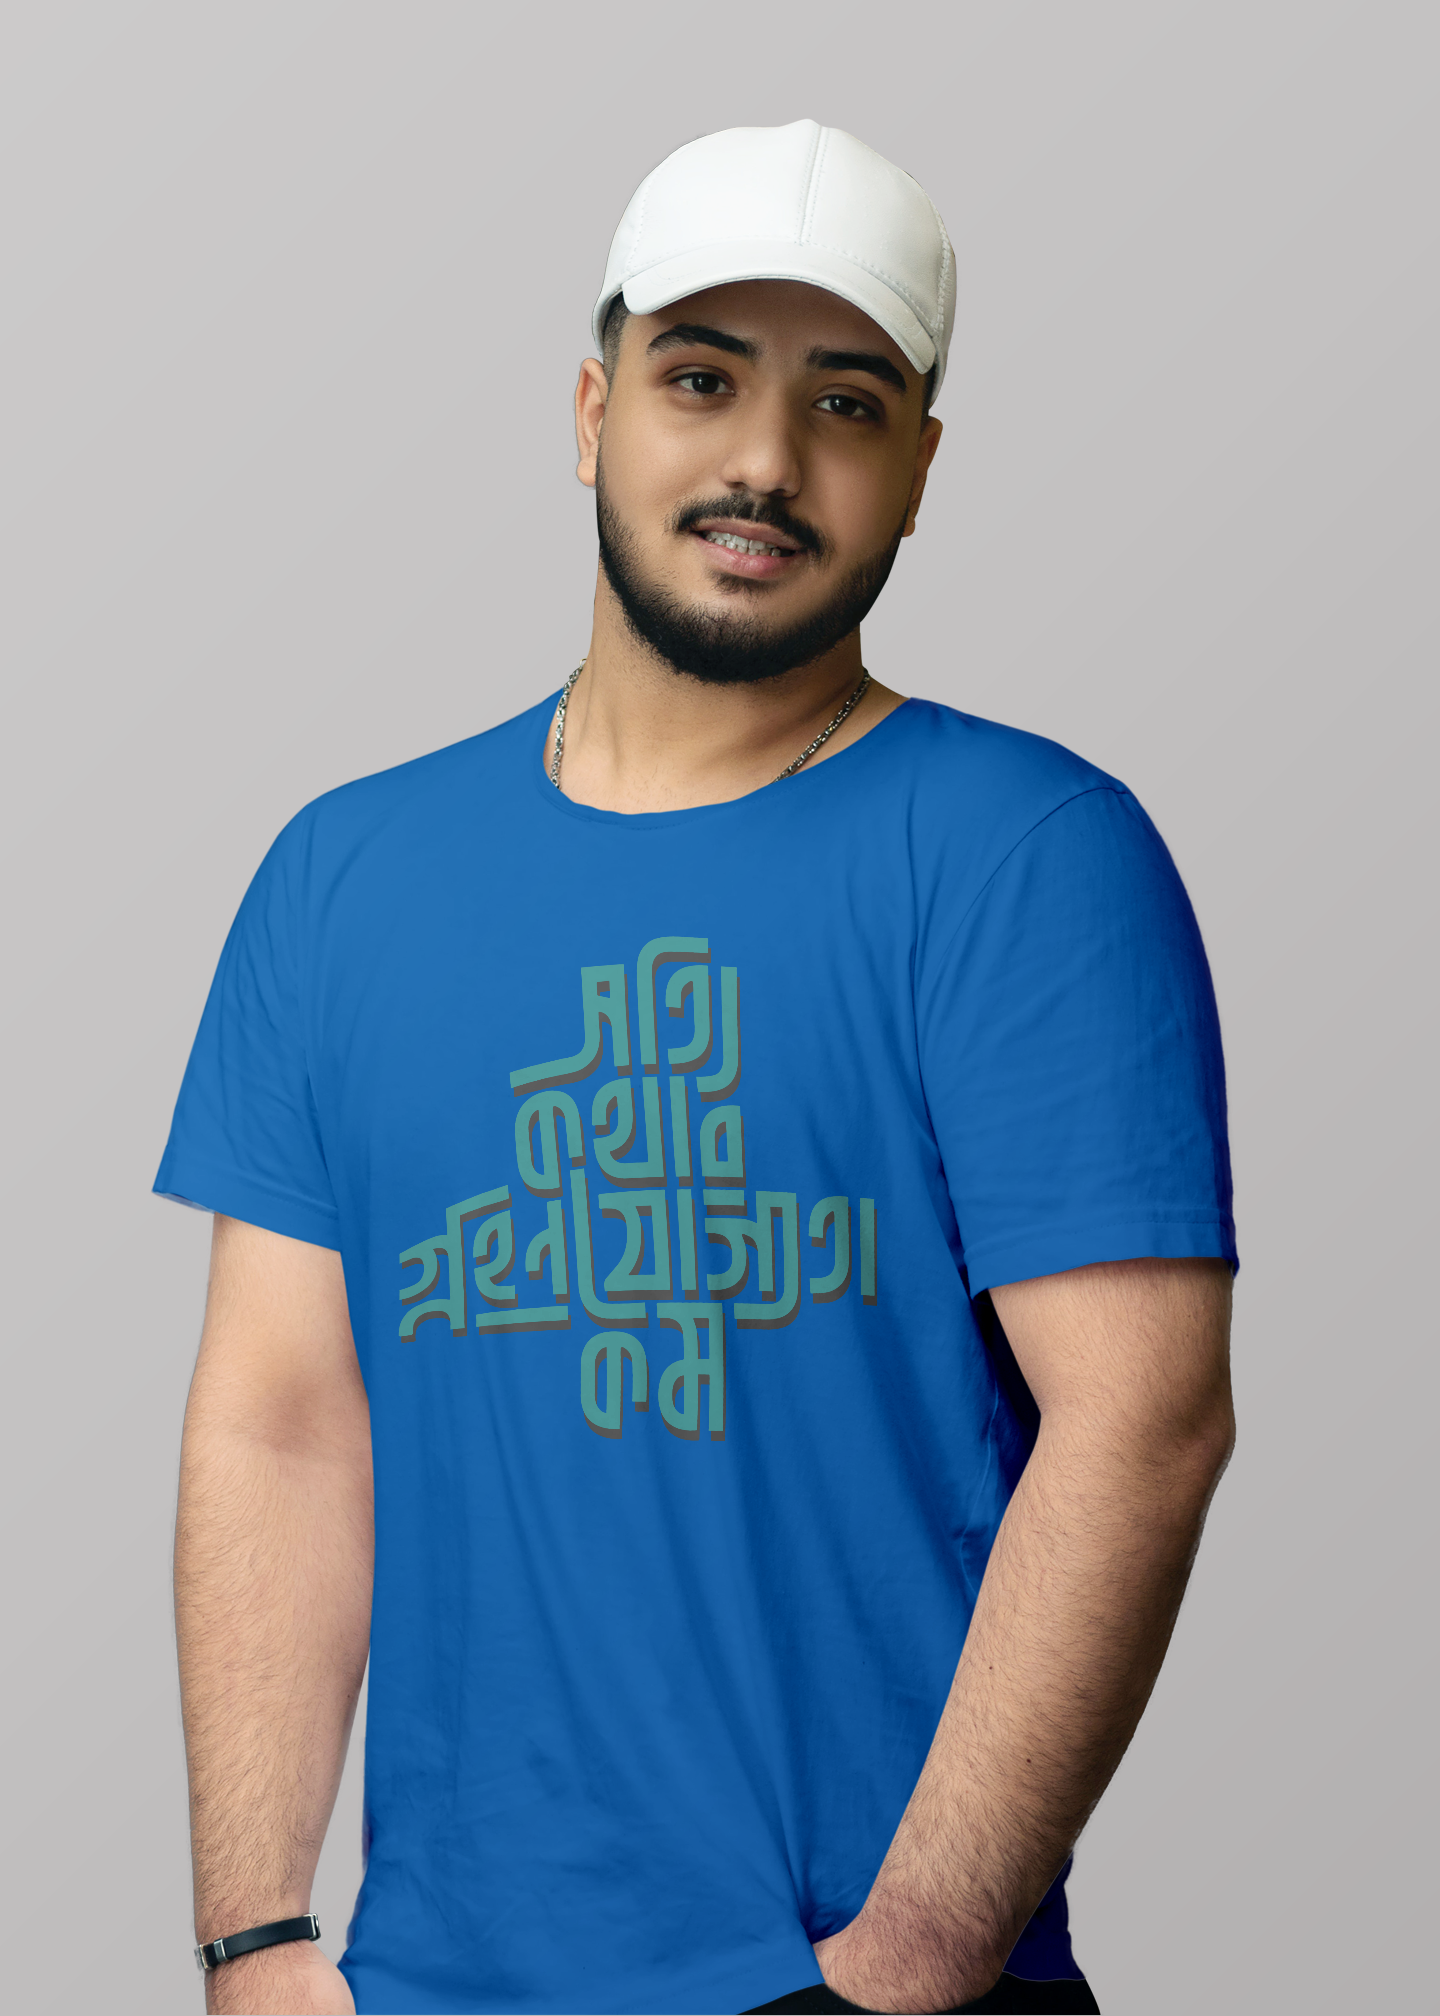 Sotti kothar grohonjoggota kom bengali Printed Half Sleeve Premium Cotton T-shirt For Men